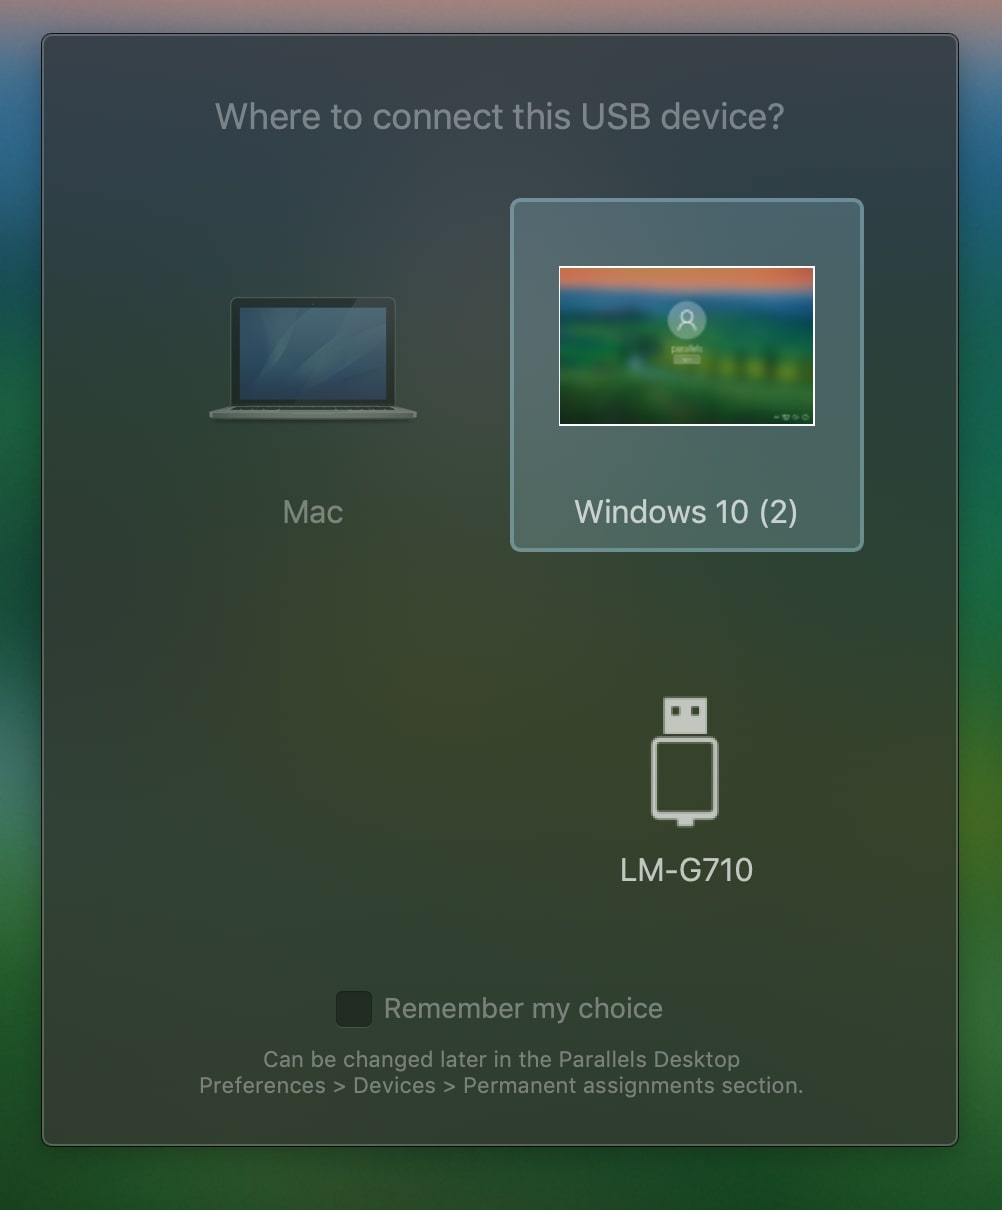 download parallels desktop